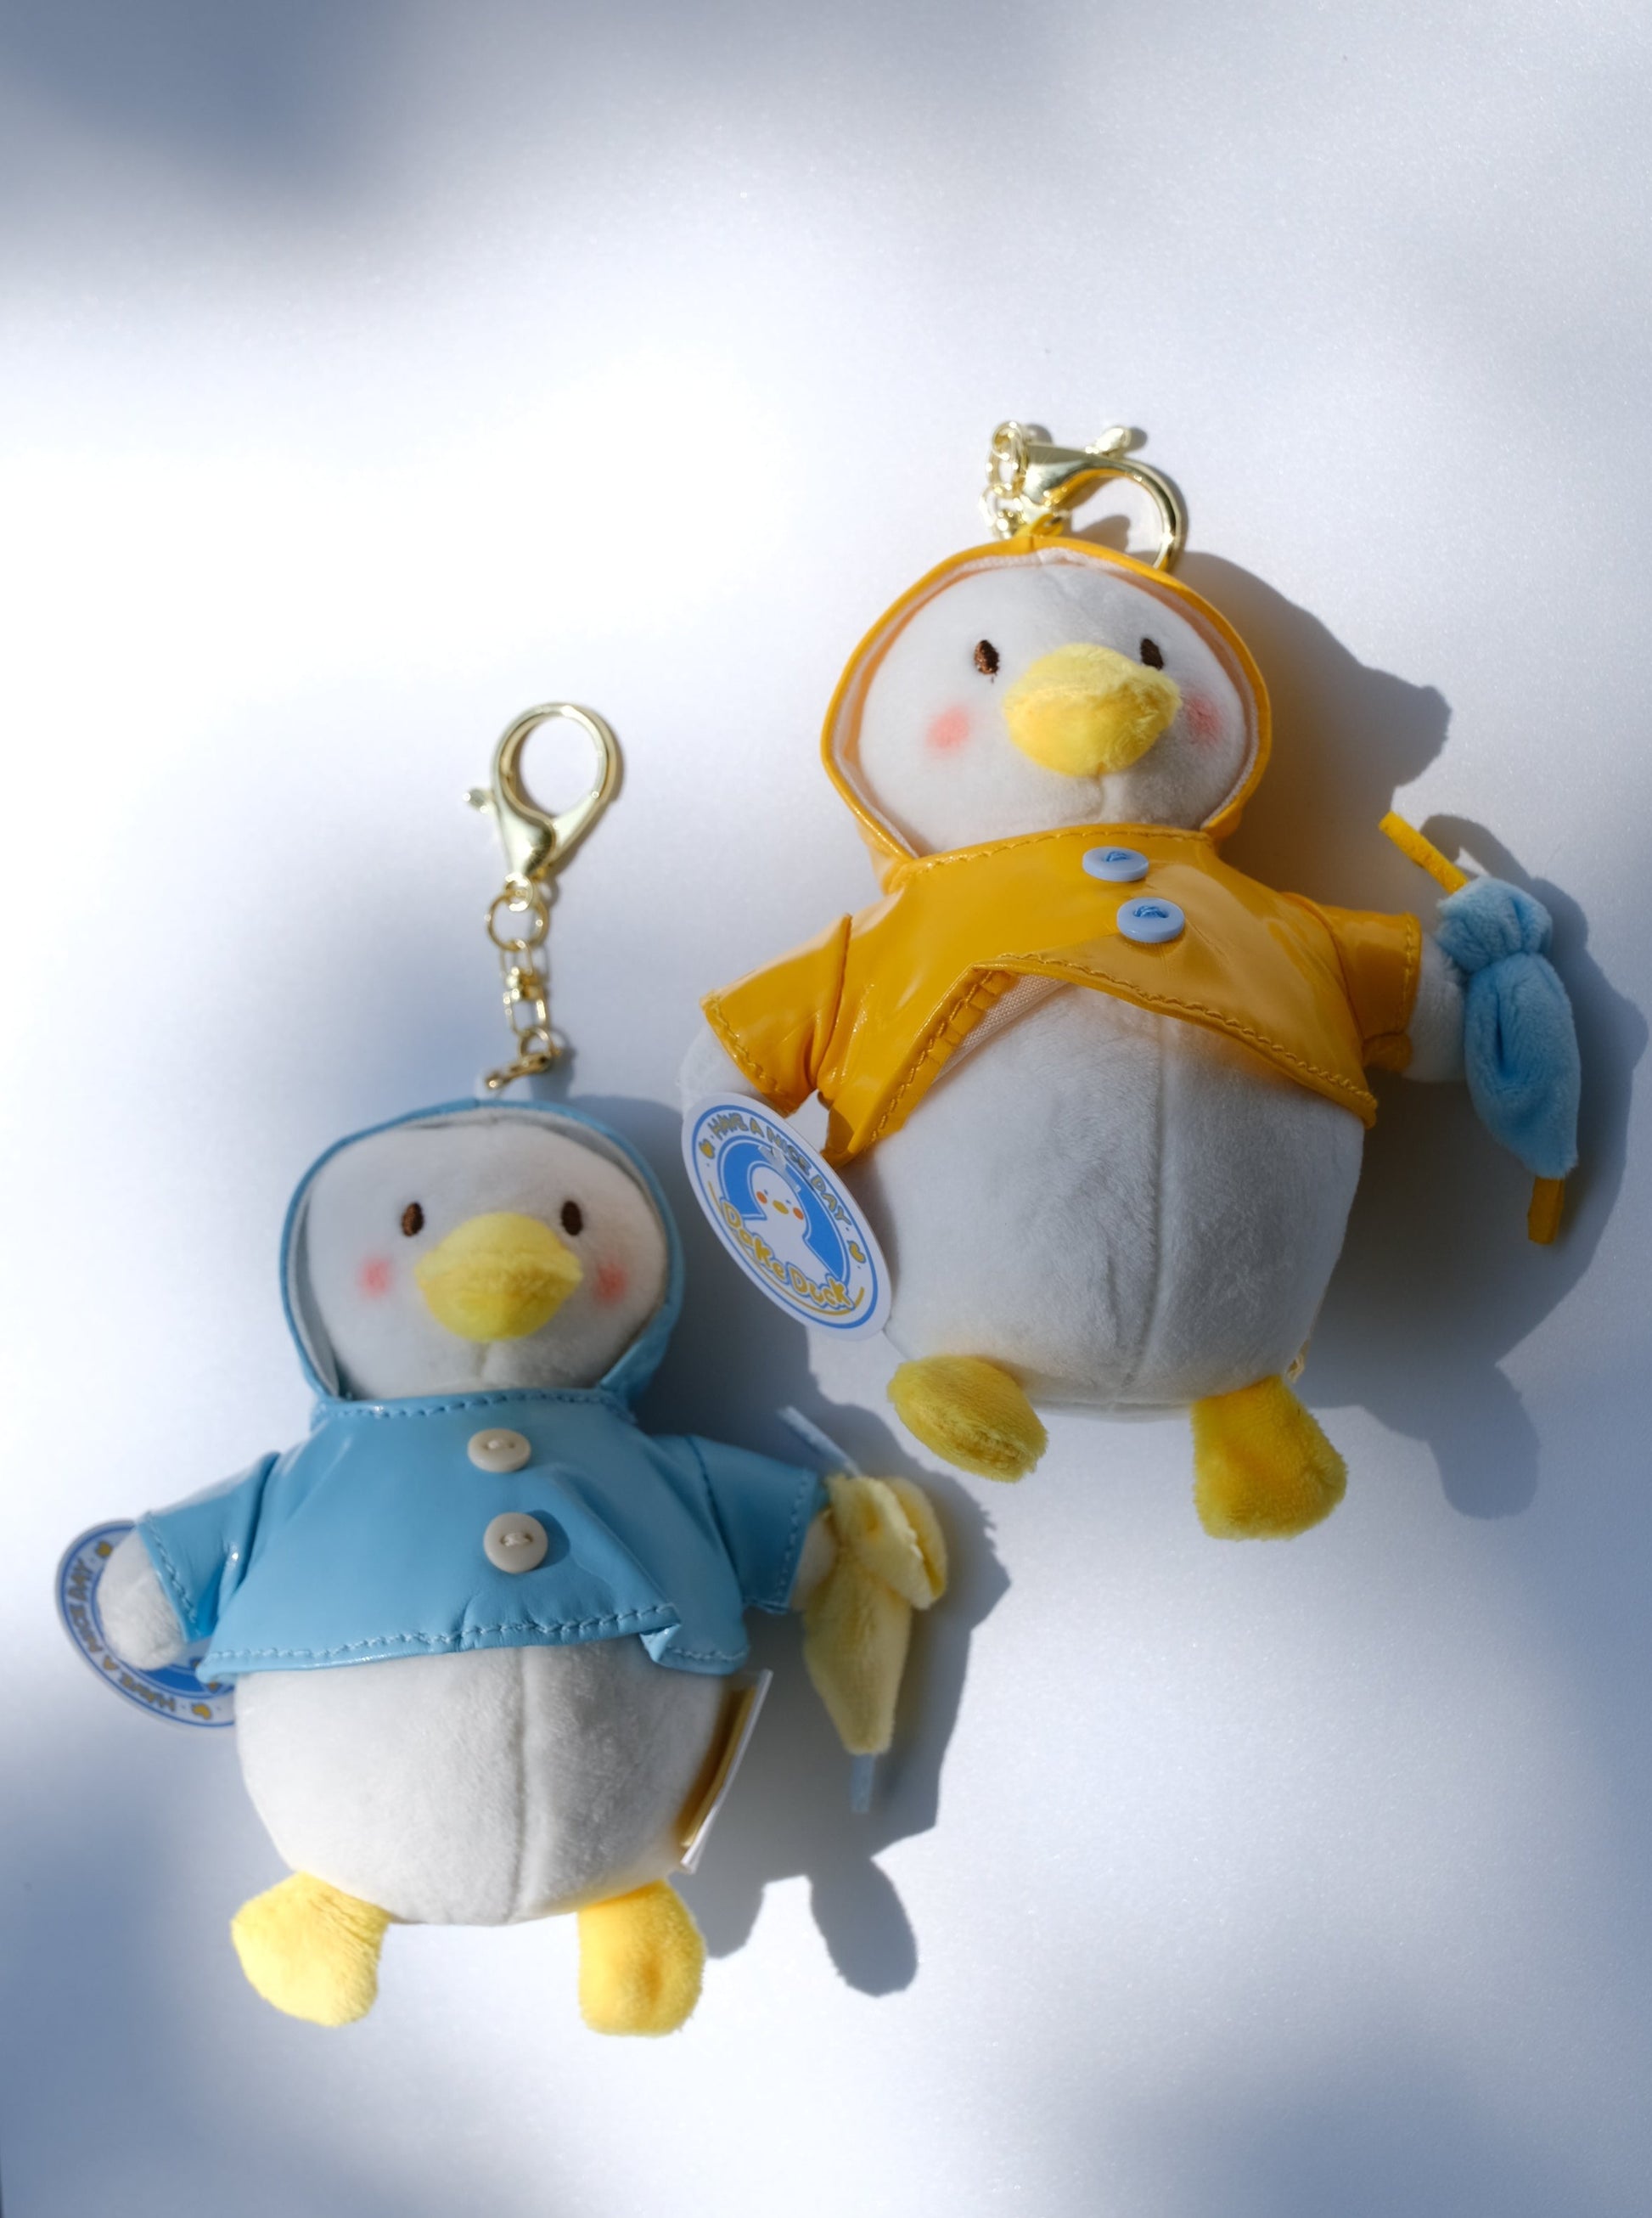 Skindy 12cm Duck Keychain Cute Plaid Bow Yellow/White Duck Doll